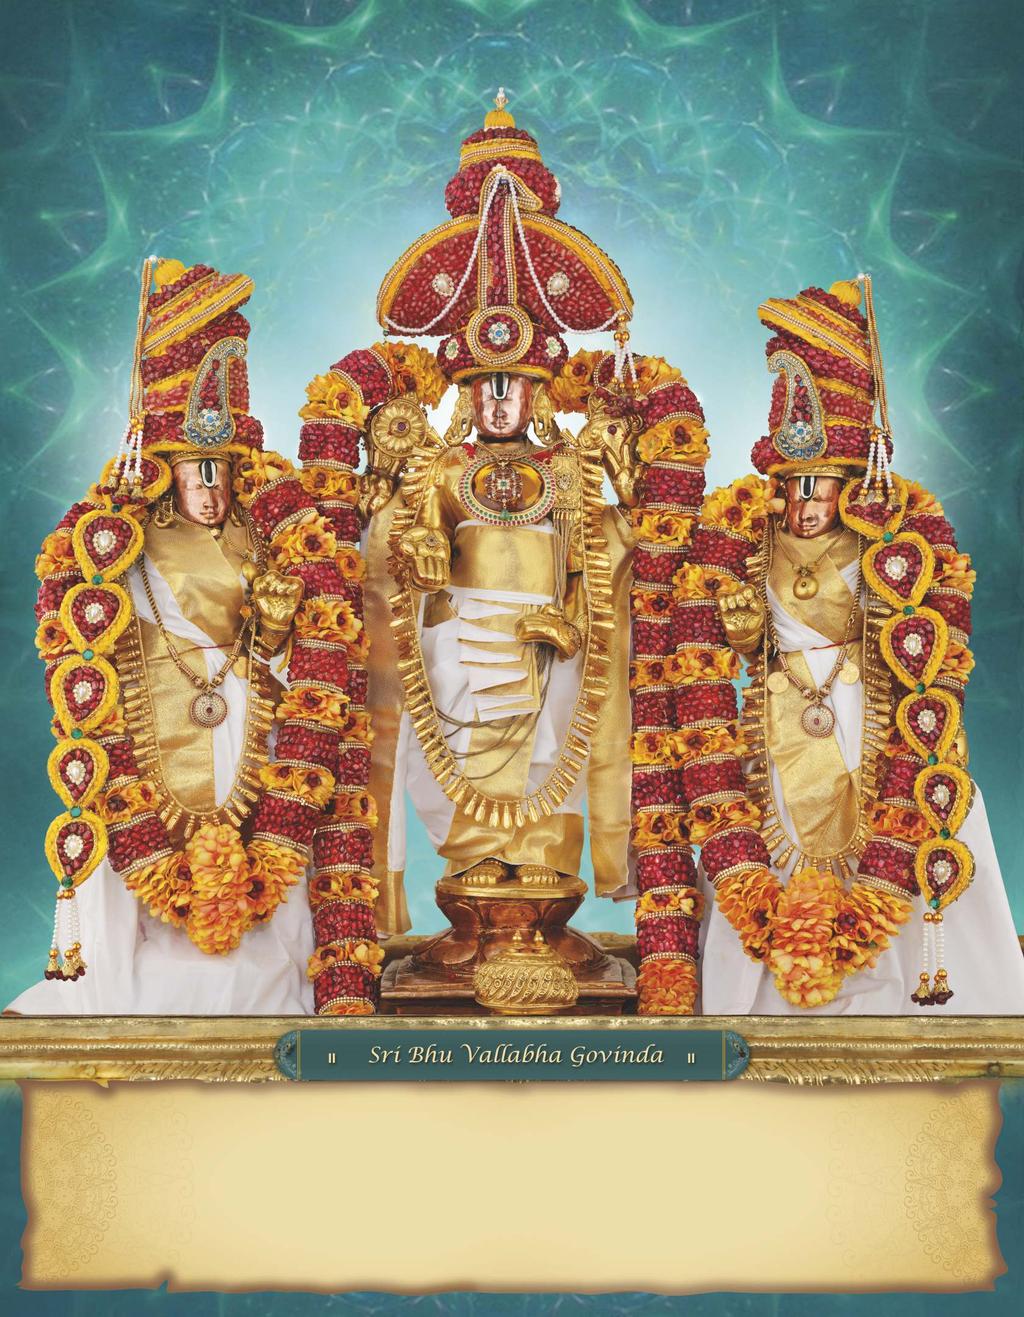 Tirumala Devasthanams Sri Malayappa Swamivaru with His Consorts, Sridevi & Bhoodevi, Tirumala January 2018 Mon Tue Wed Thu Fri Sat Sun Mon Tue Wed Thu Fri Sat Sun Mon Tue Wed 18 19 20 21 22 23 24 25